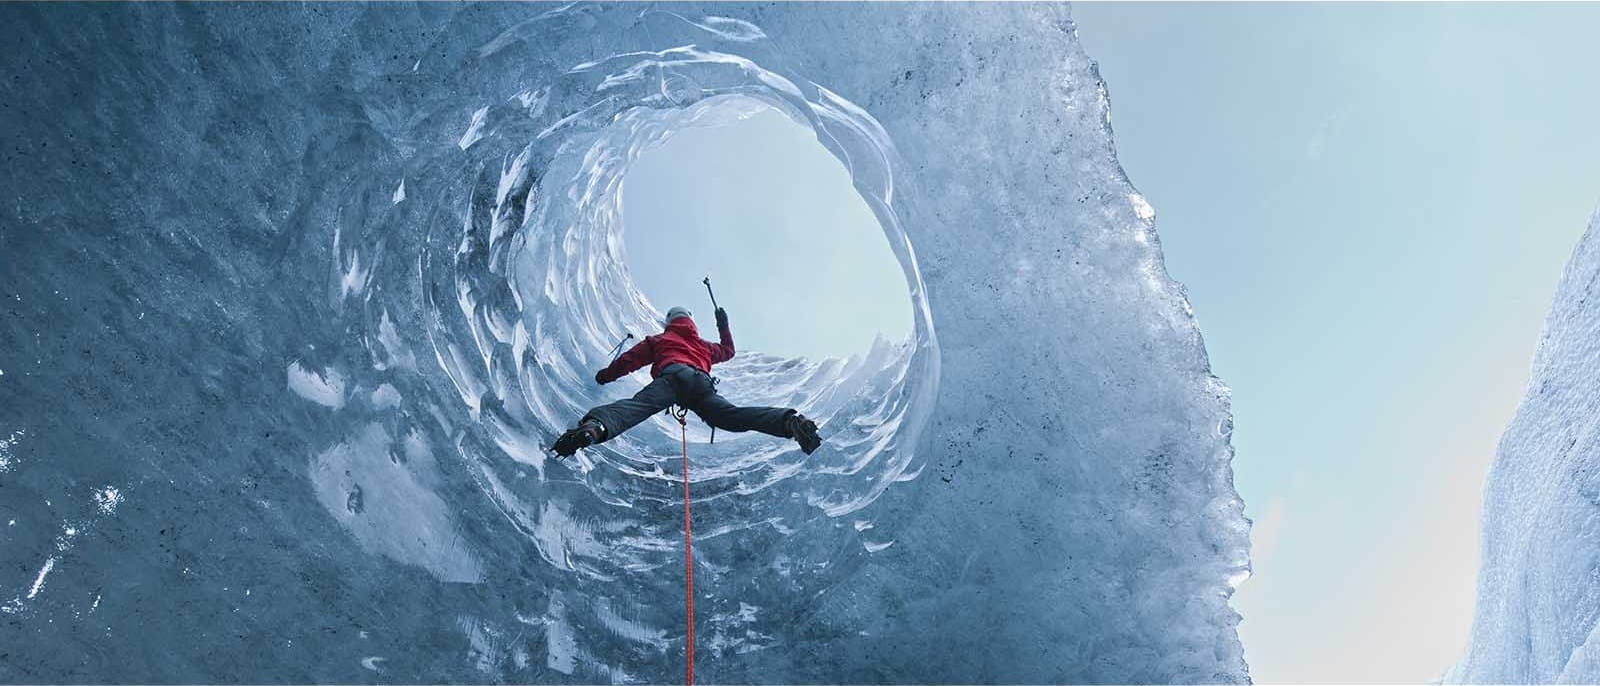 ice climber climbing man orange hoodie black trousers helmet pick blue ice cave